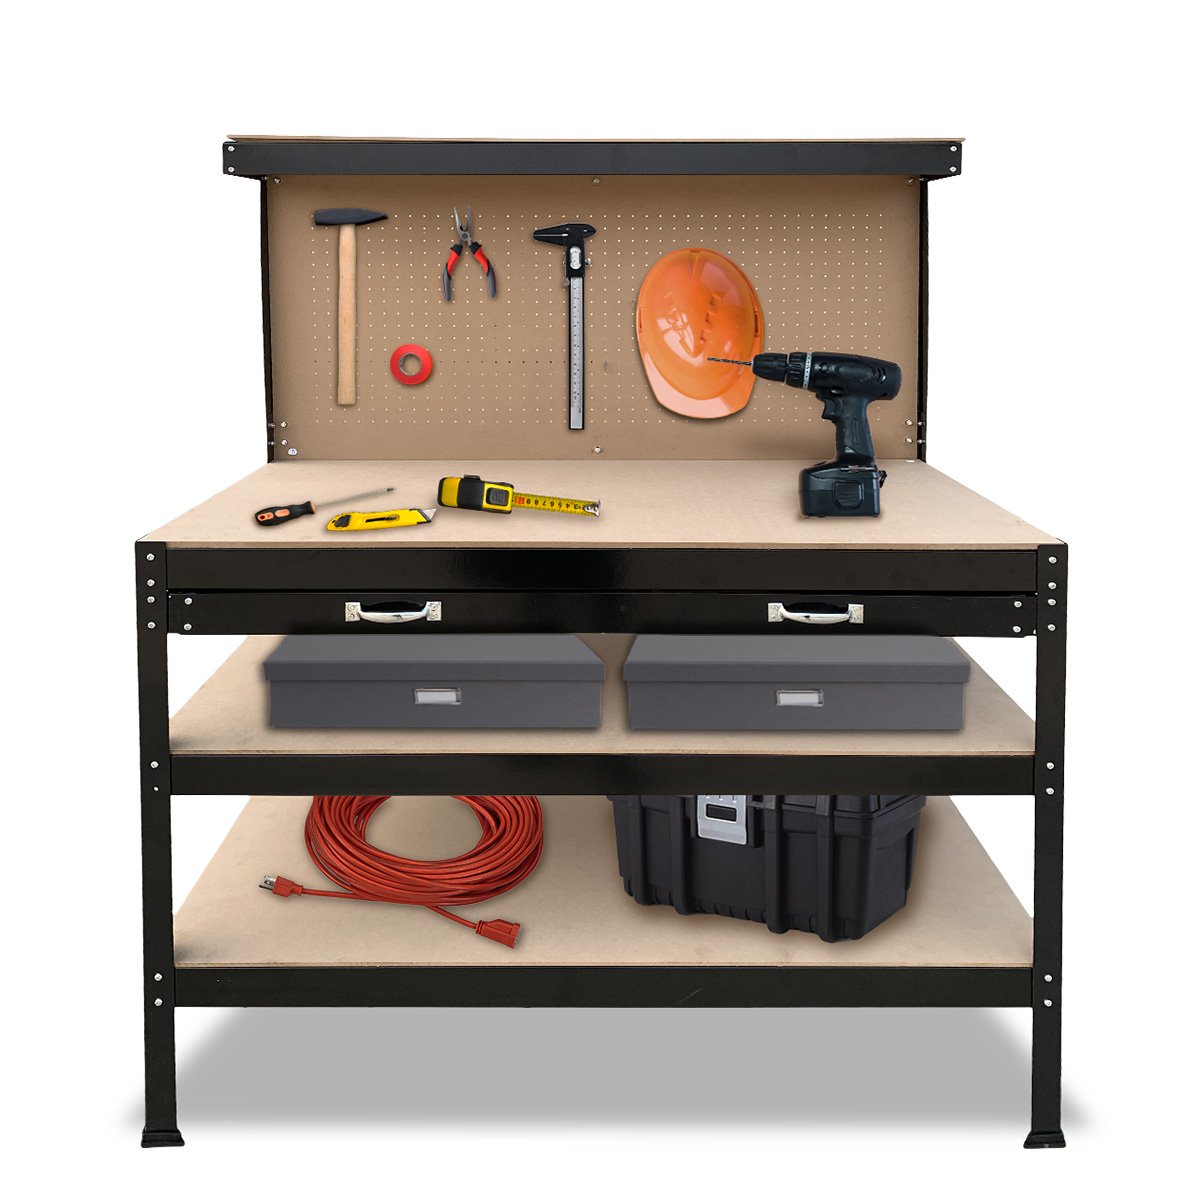 3-layer Steel Work Bench Garage Storage Table Tool Shop Shelf Pegboard Drawer 2